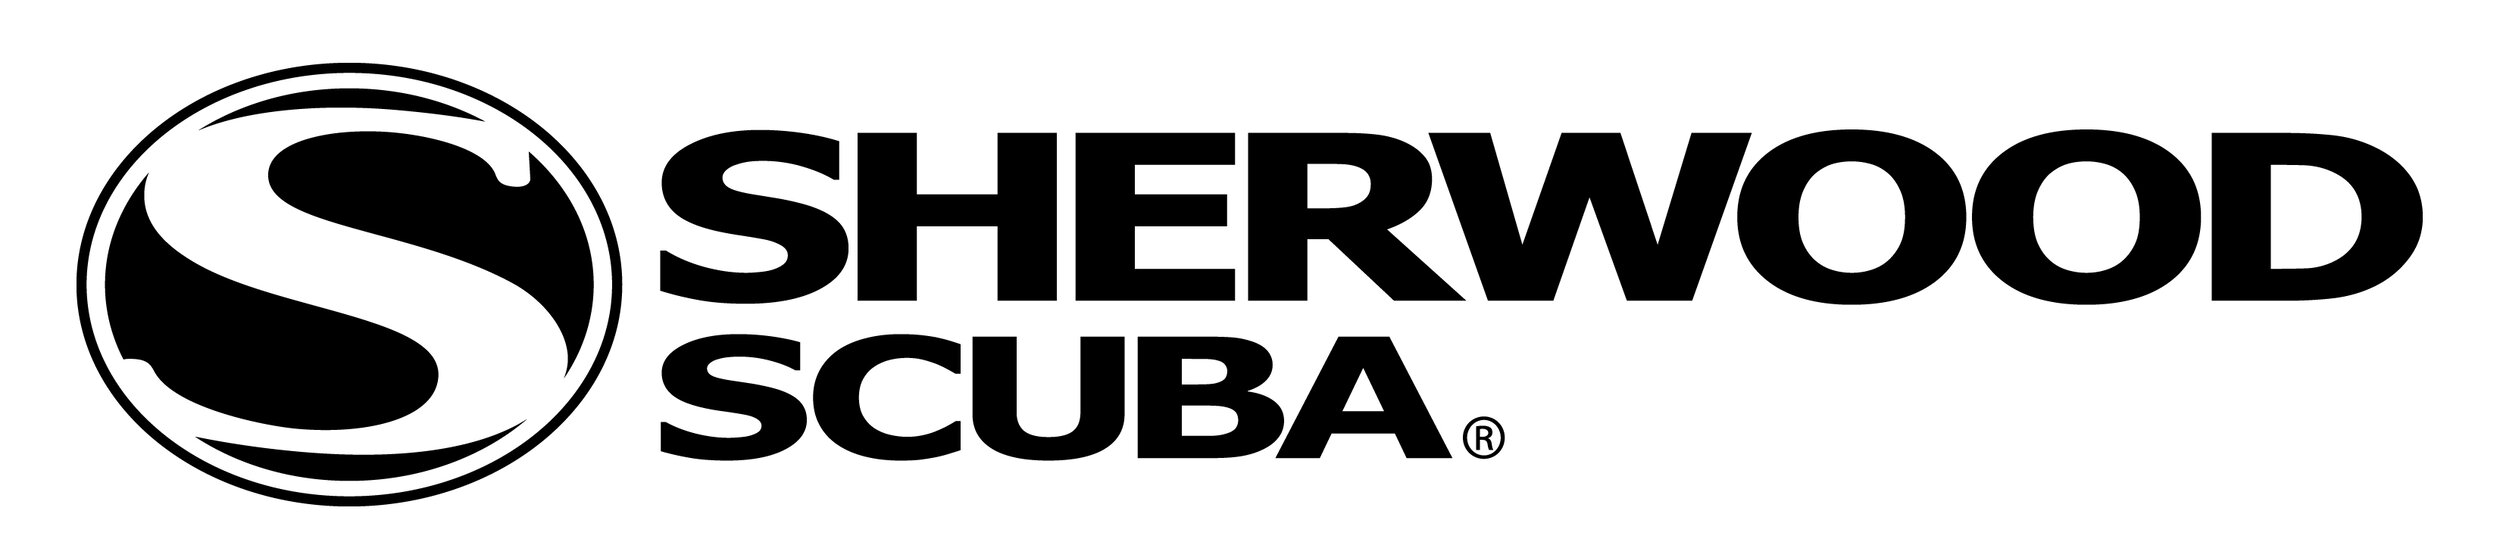 Sherwood Scuba logo.jpg